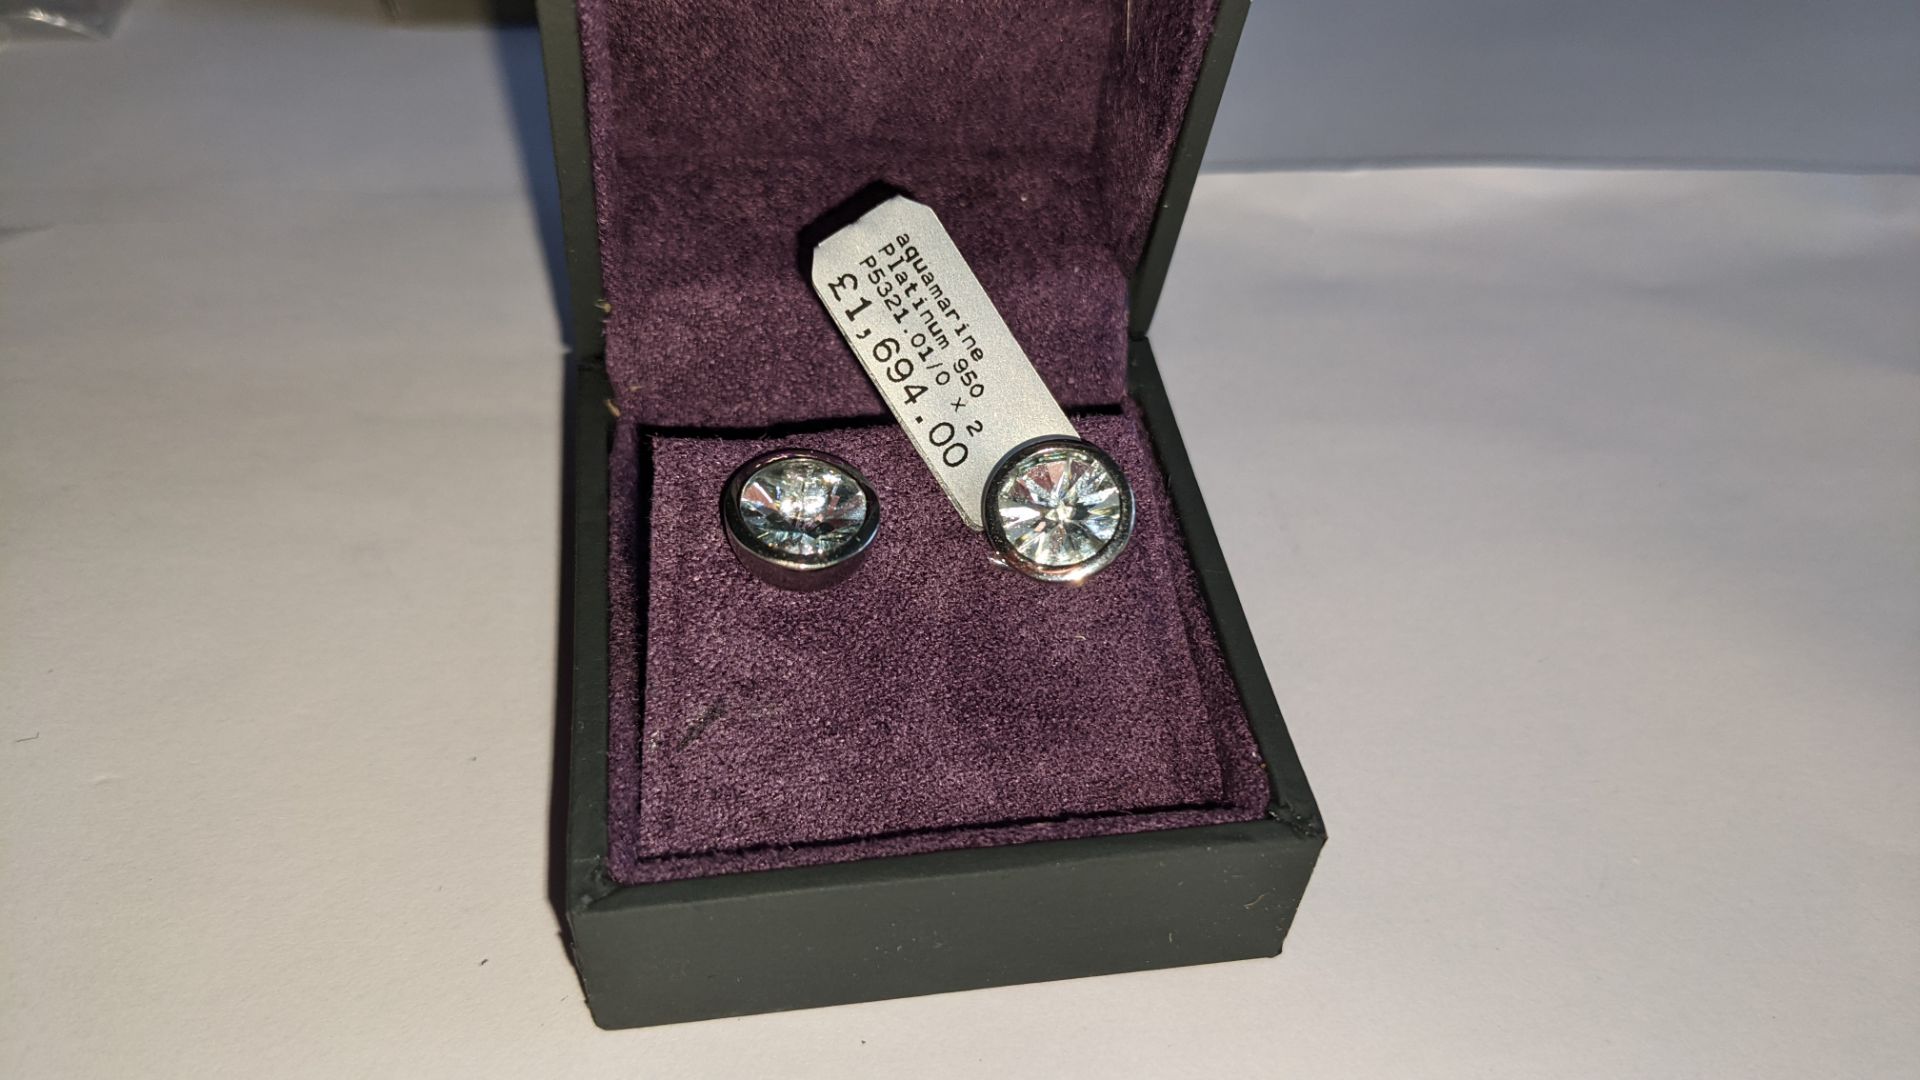 Pair of Platinum 950 & aquamarine earrings with 8mm round stones RRP £1,694 - Image 2 of 11